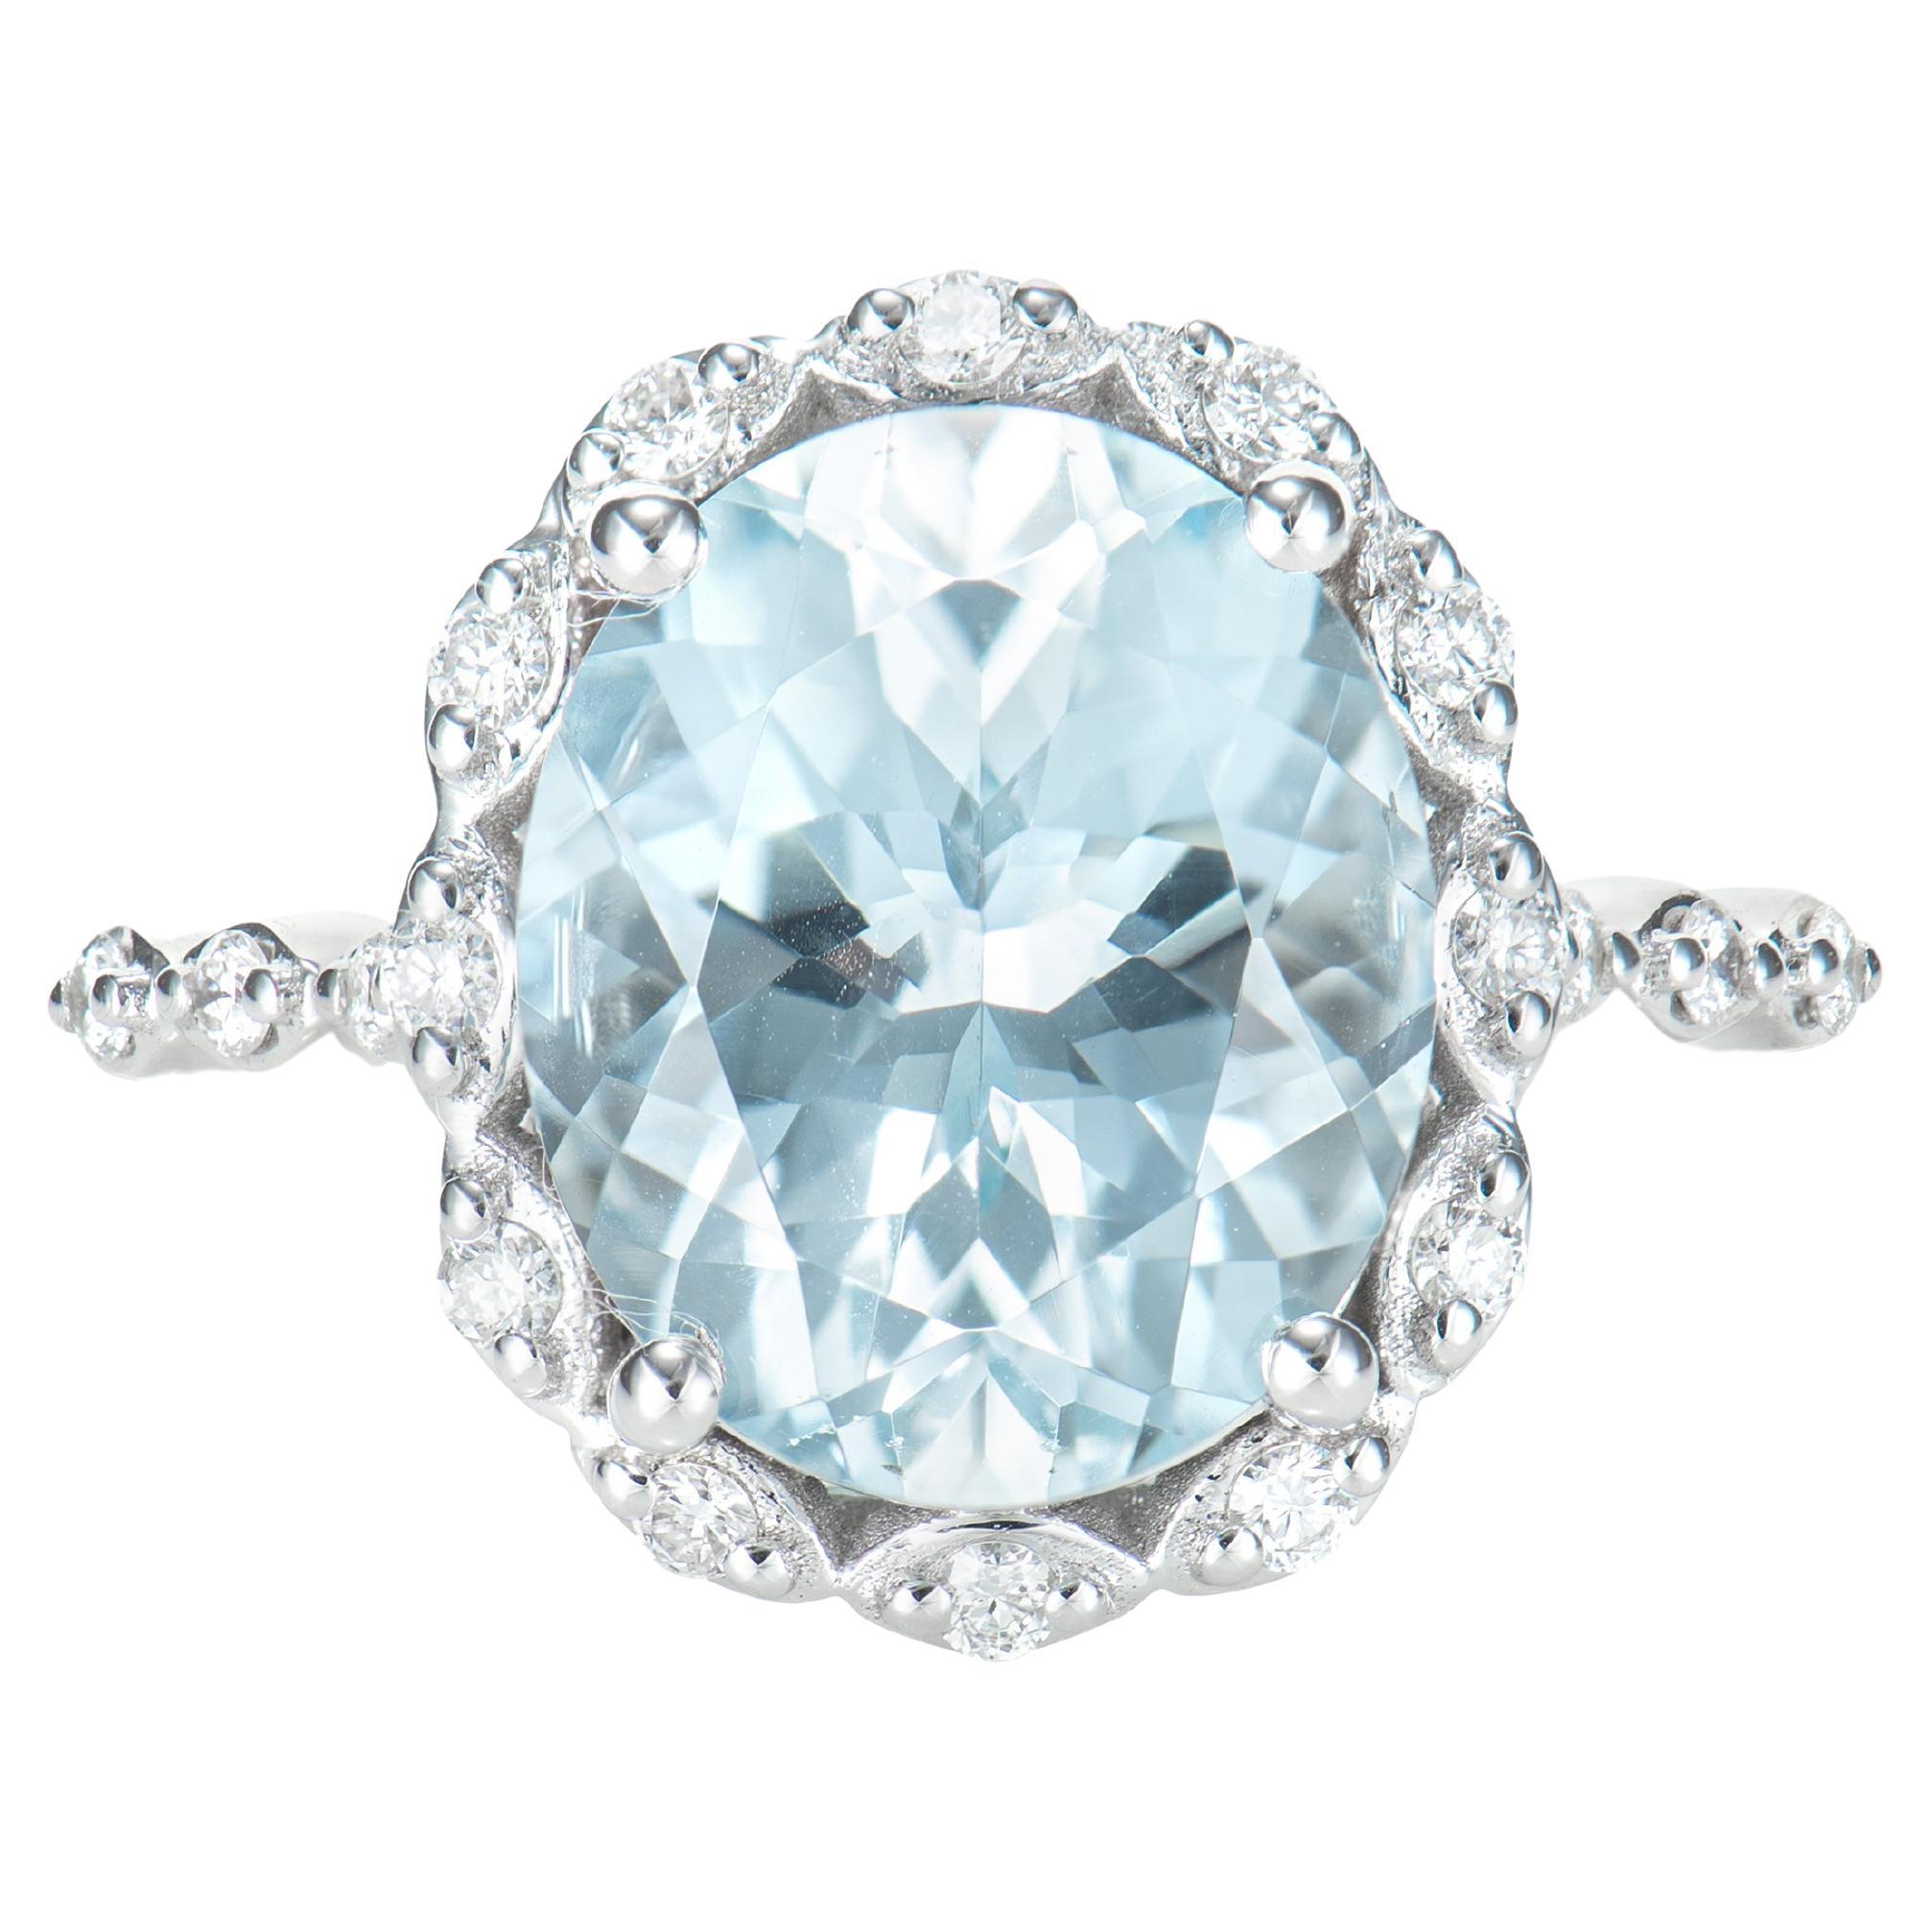 4.20 Carat Aquamarine Elegant Ring in 18 Karat White Gold with White Diamond. For Sale